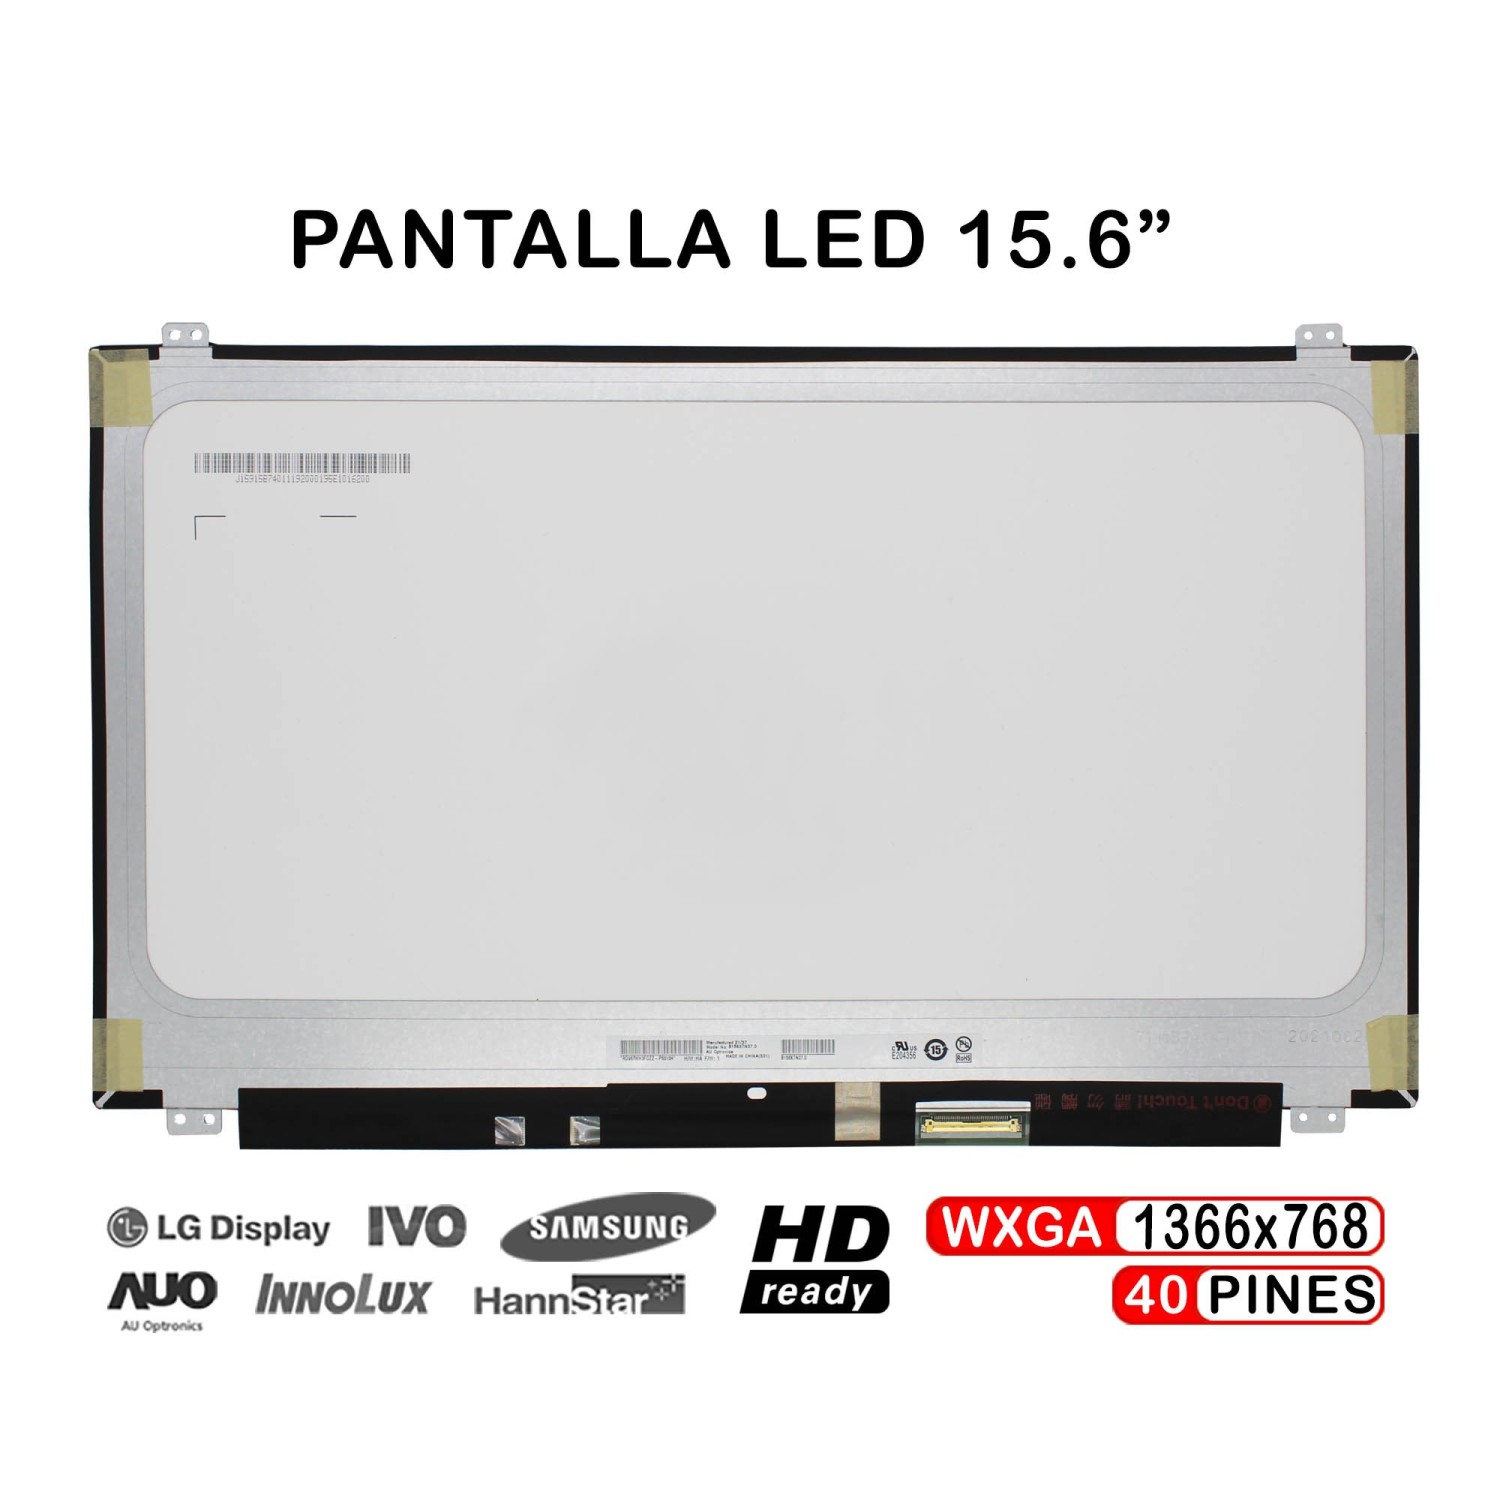 Pantalla LED 15.6 portátil B156XTN07.0 H/W:HA F/W:1 mejor precio